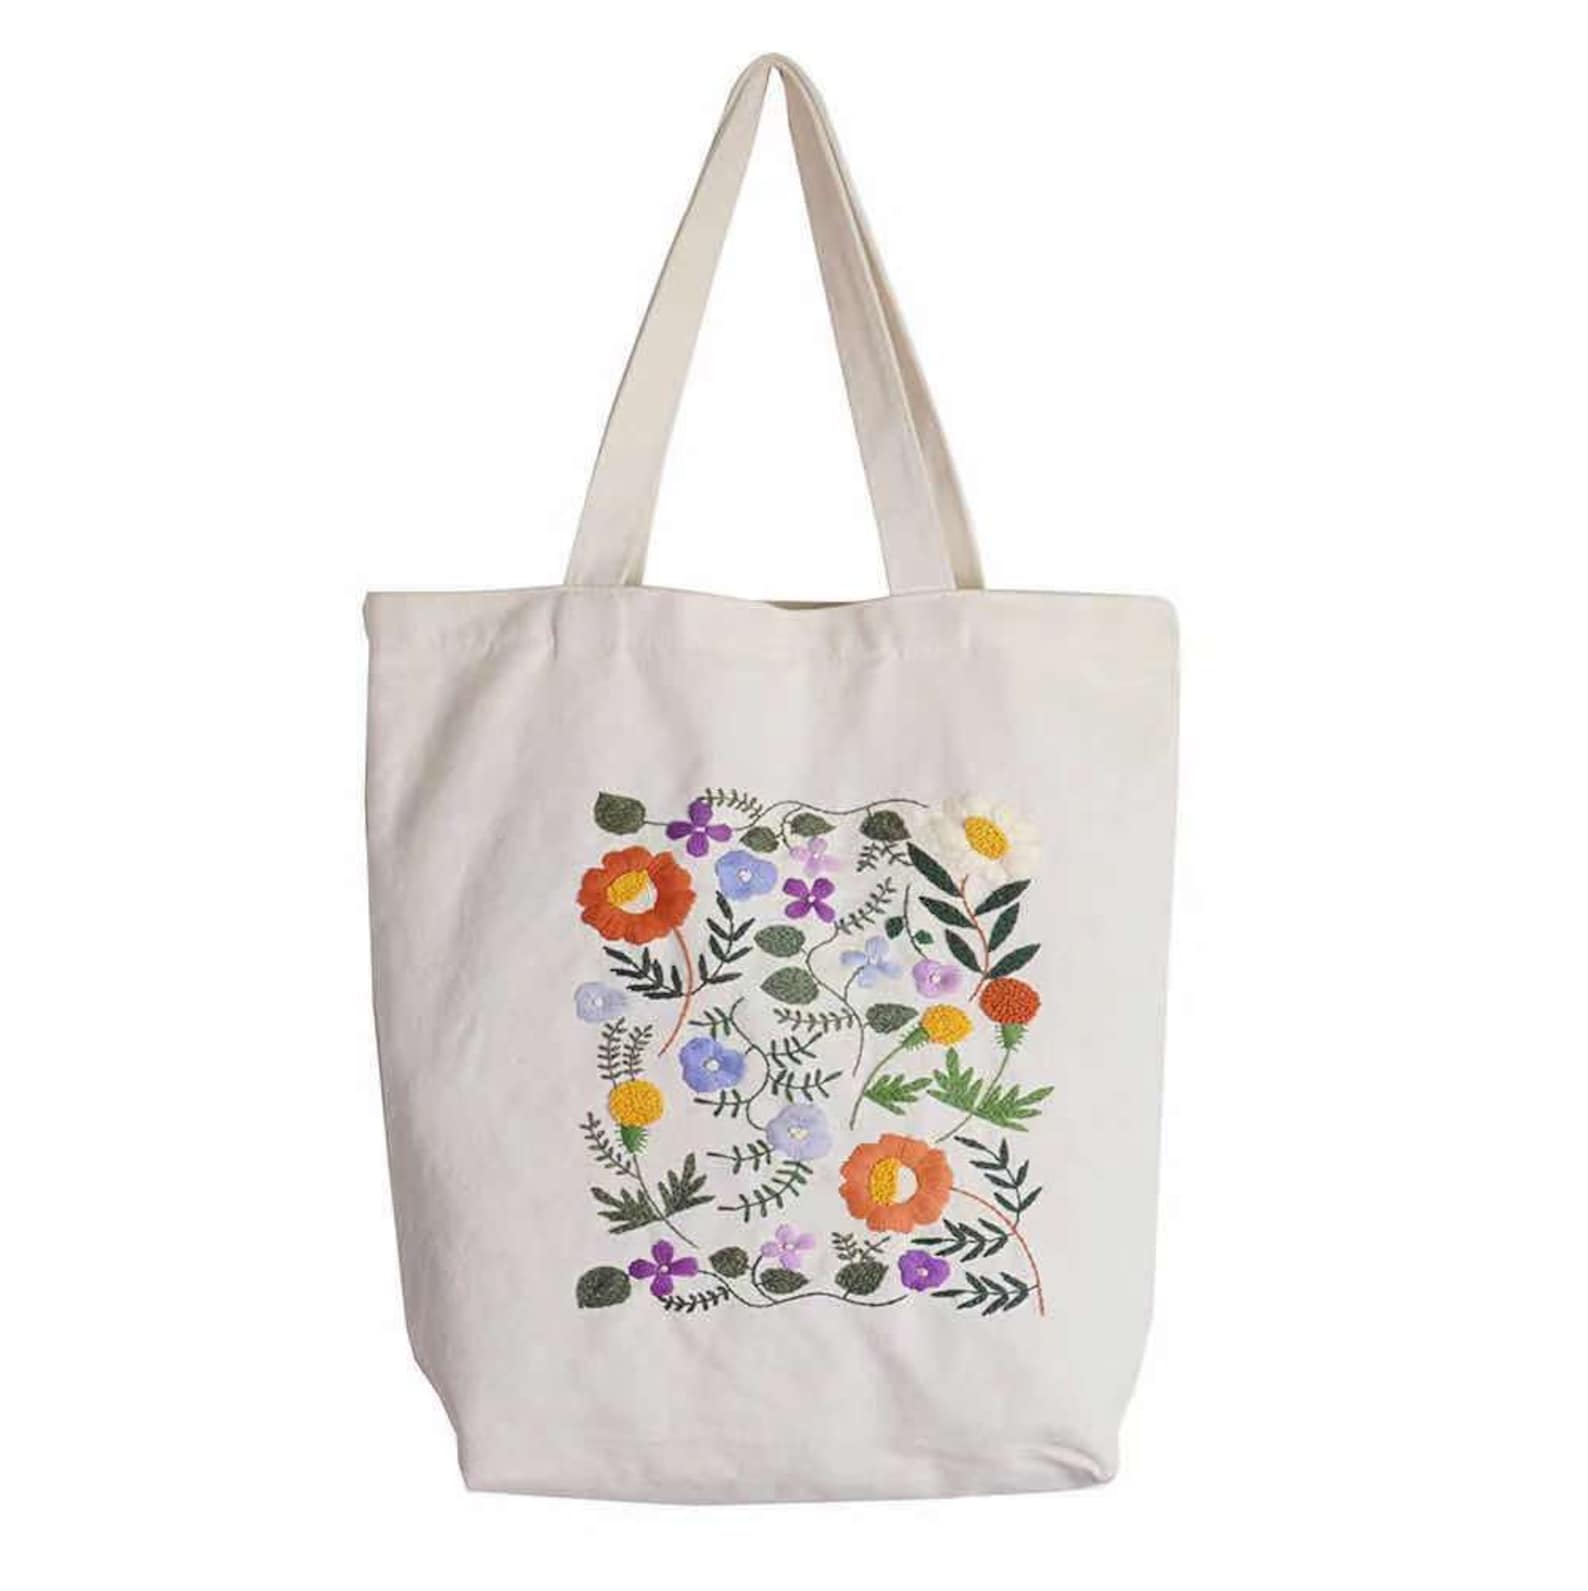 Embroidery Kit Canvas Bag For BeginnerDIY Craft KitFloral | Etsy